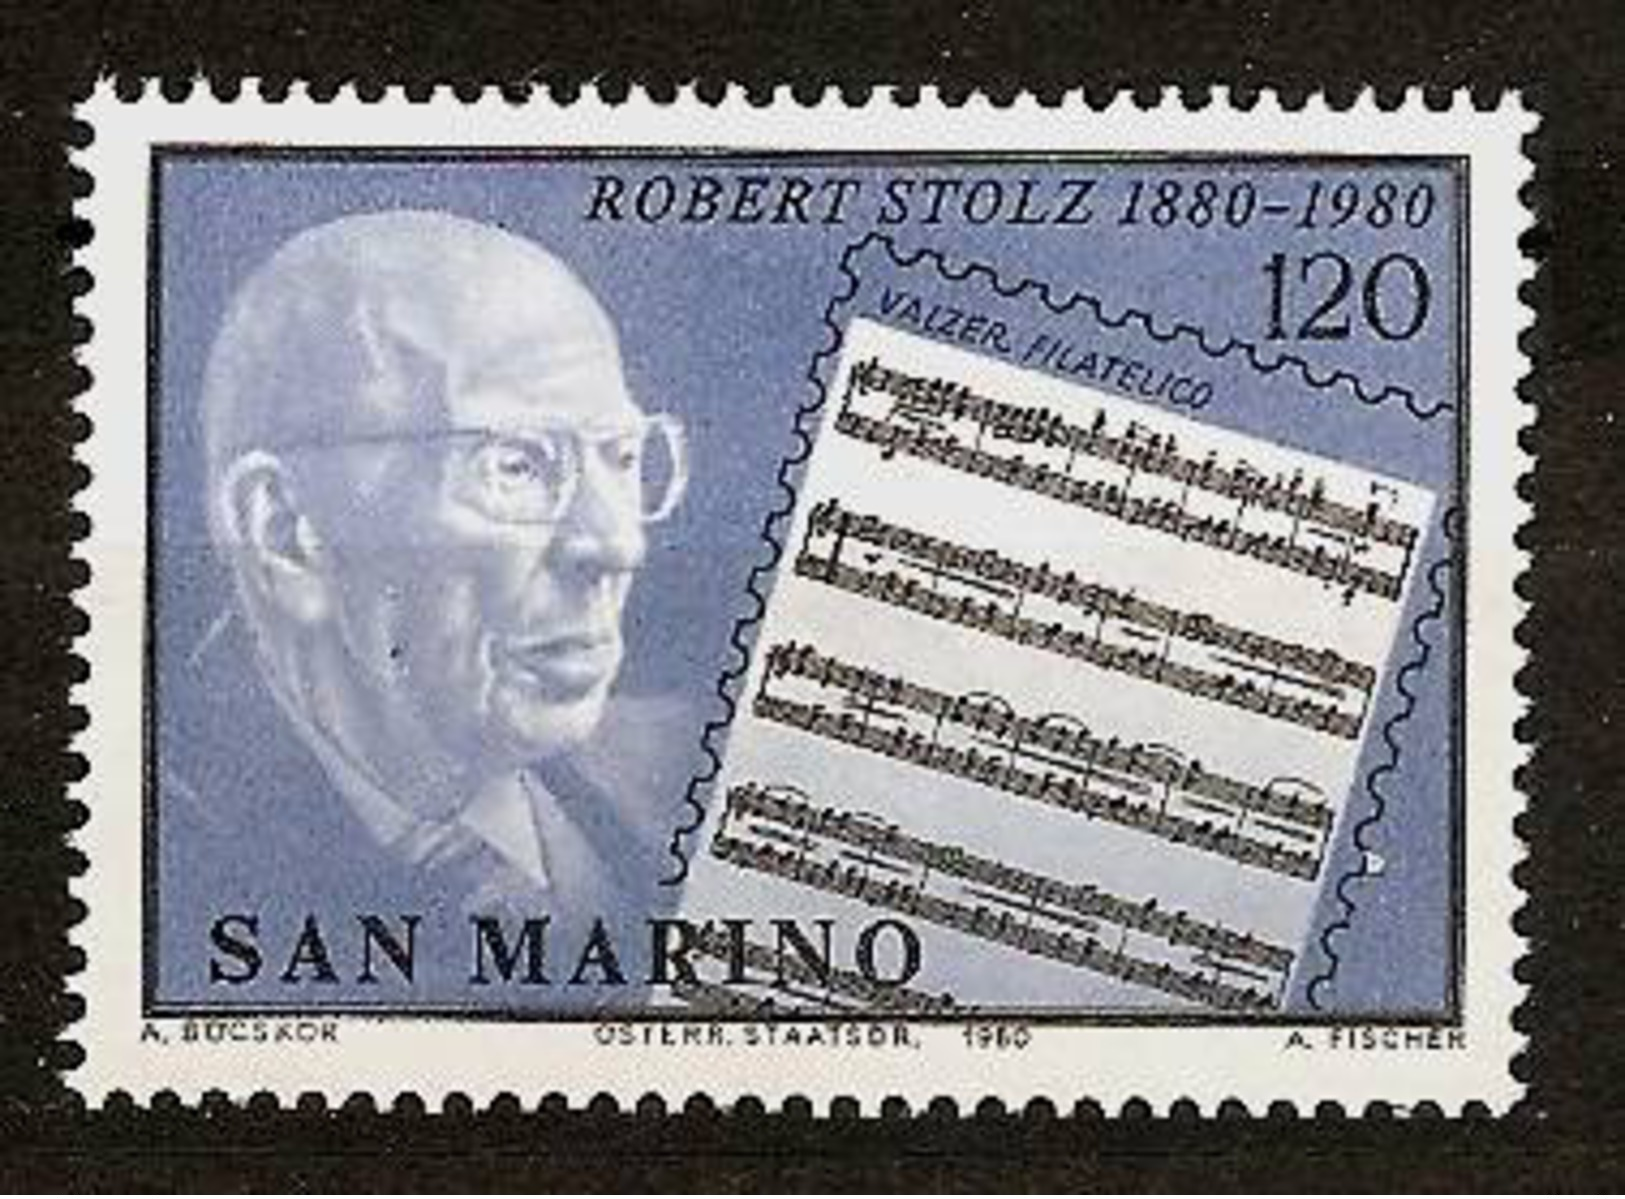 SAN MARINO 1980 - Centennial ROBERT STOLZ Austrian Songwriter / Conductor / Composer - Mi 1219 MNH ** 2003ovg - Unused Stamps